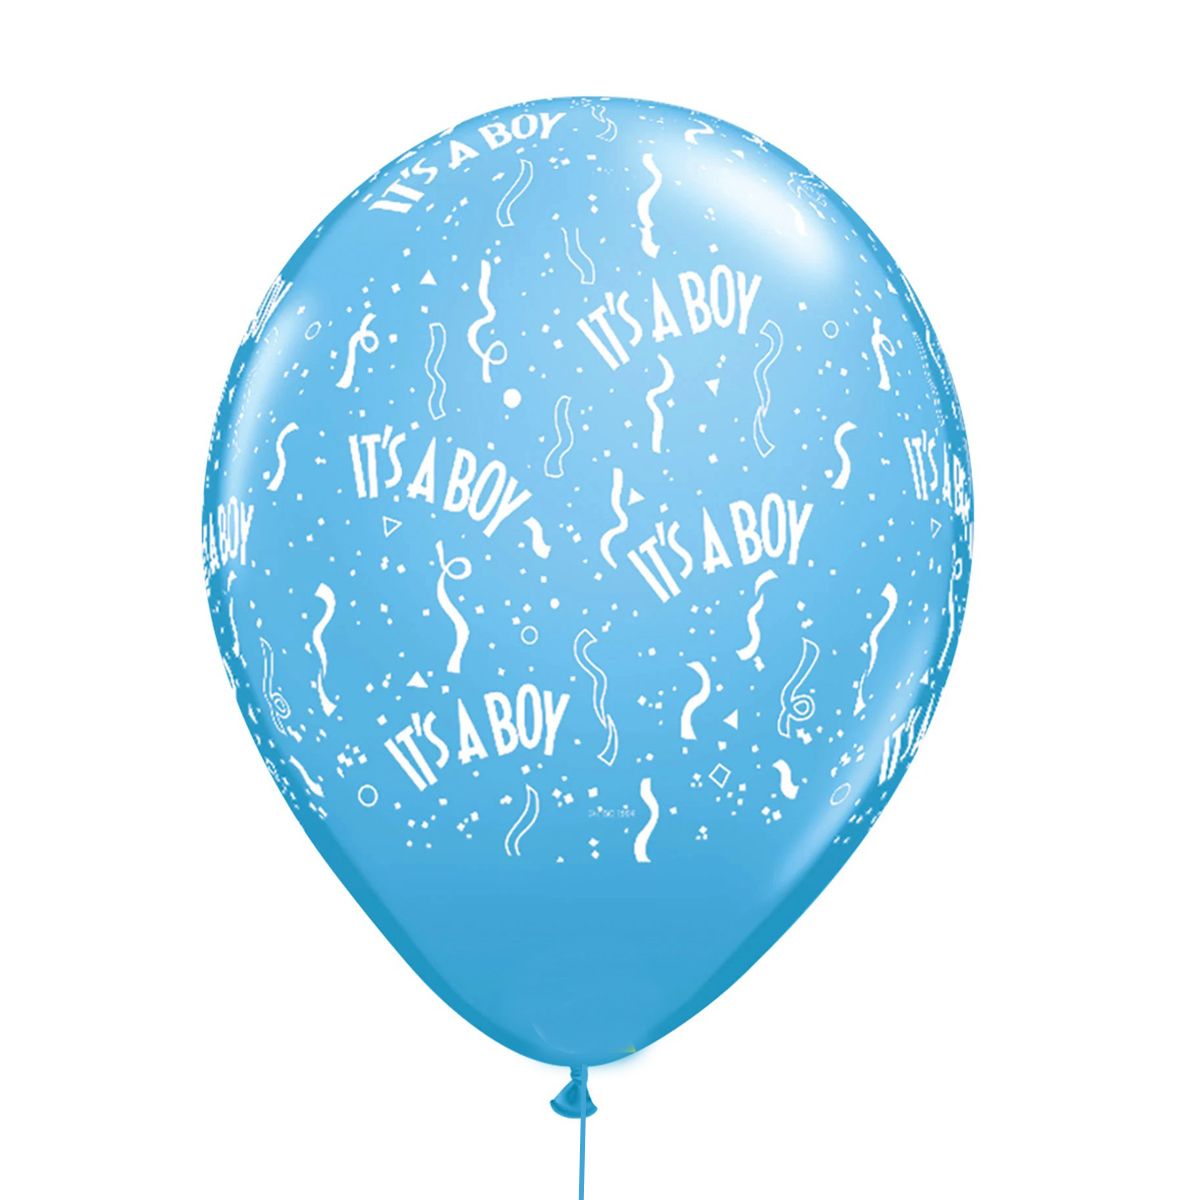 1 Balloon For Newborn Boy